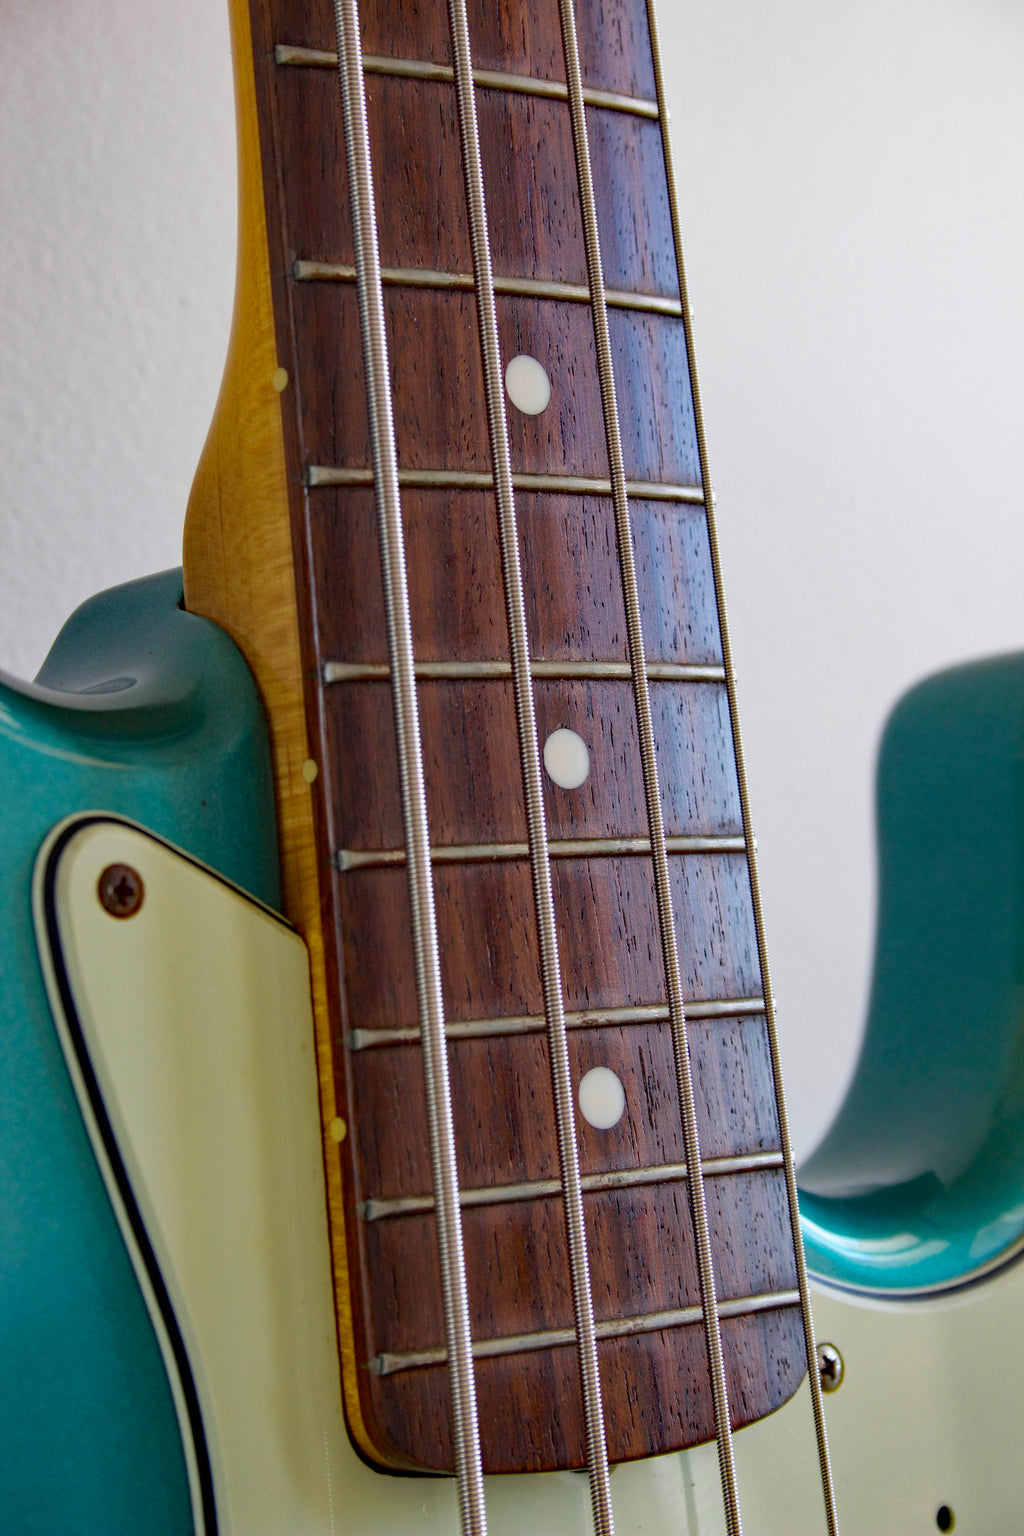 Fender Jazz Bass '62 Reissue Ocean Turquoise Metallic 1997-00